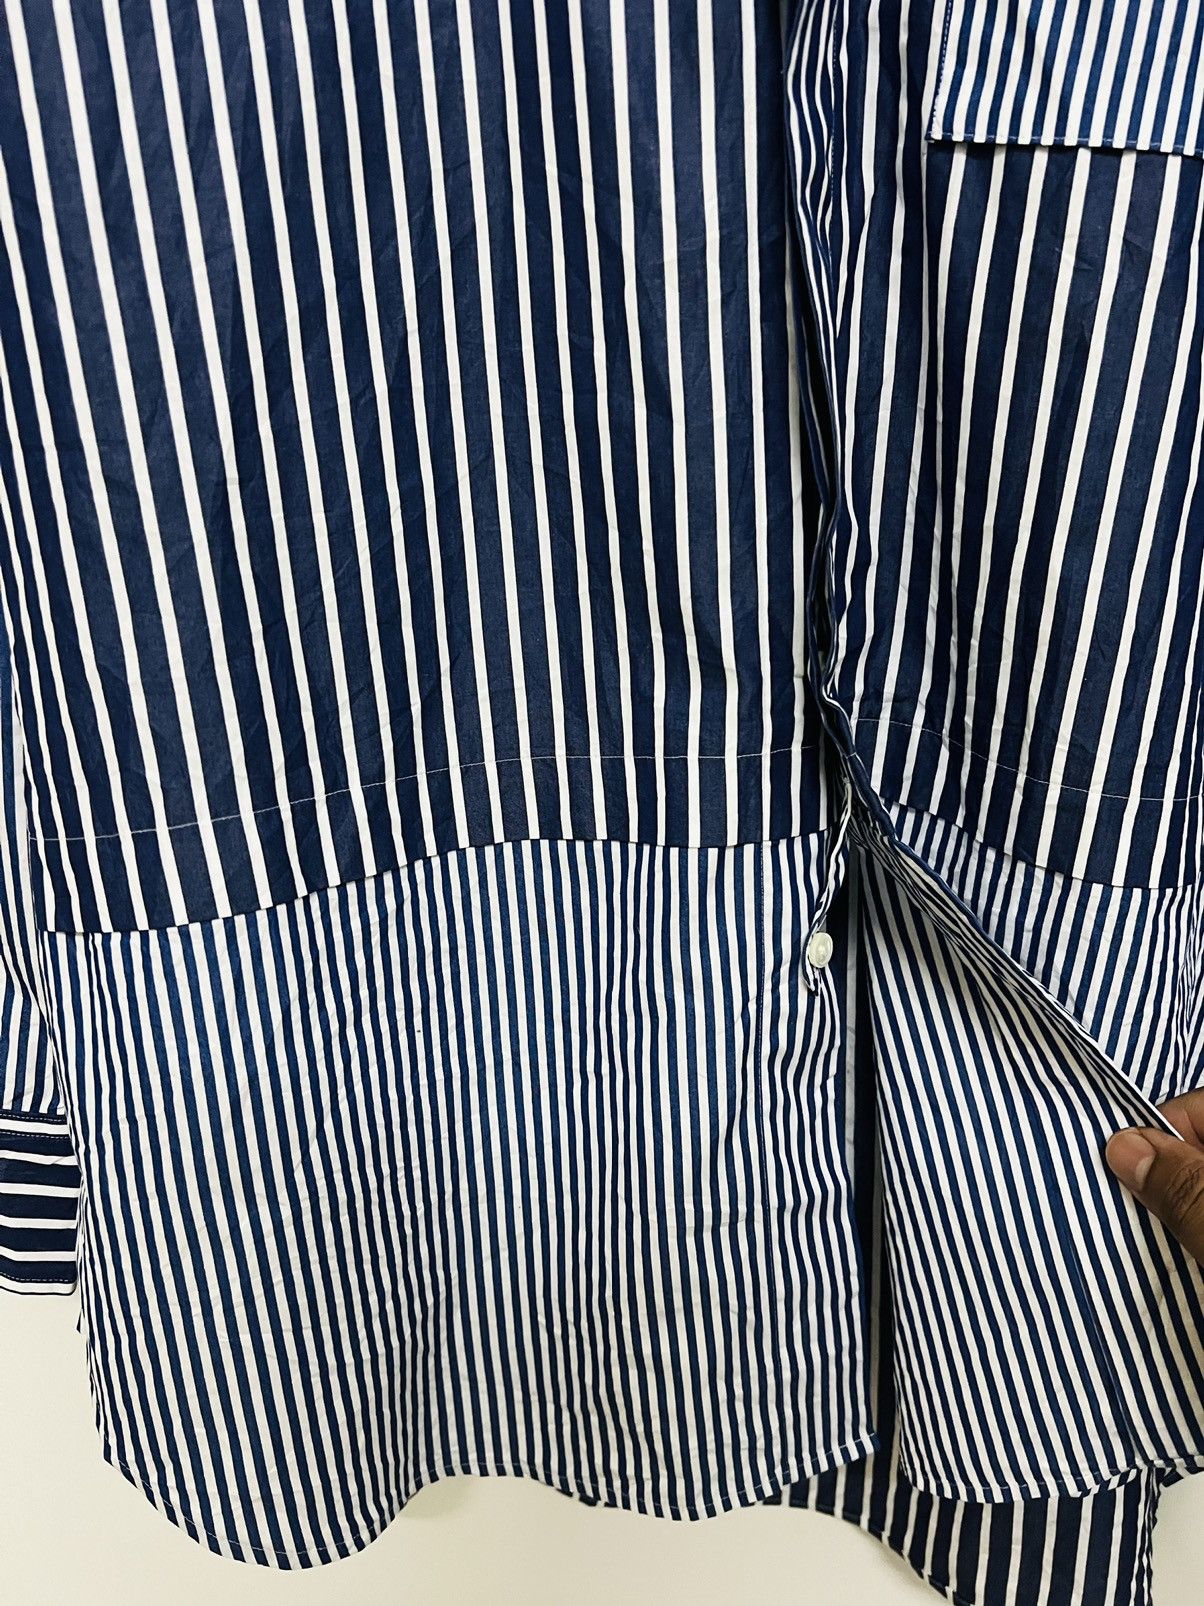 Uniqlo - Jil Sander X Ut +J Oversized Striped Shirt - 4